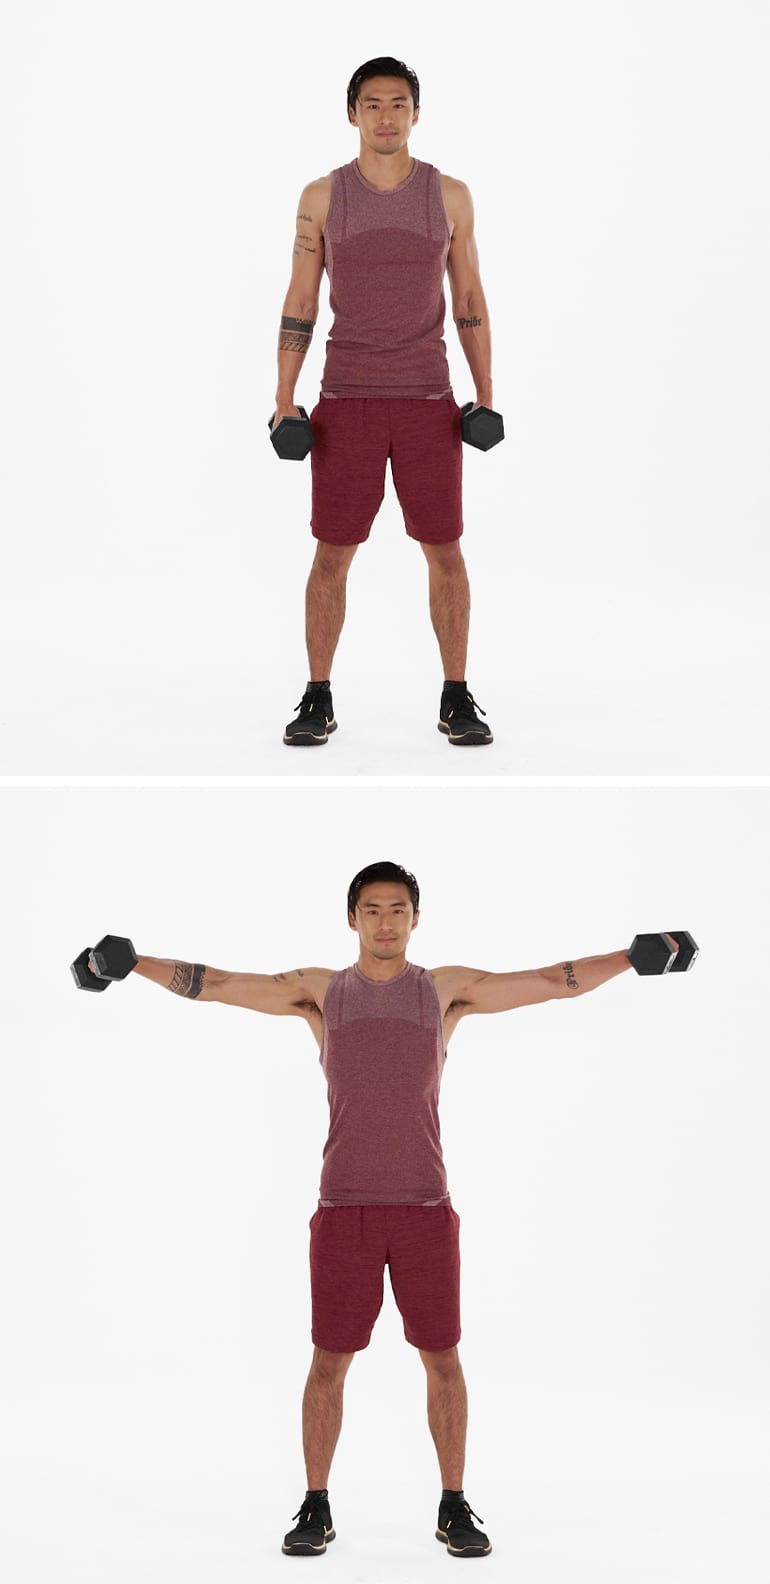 shoulder workout - dumbbell lateral raise